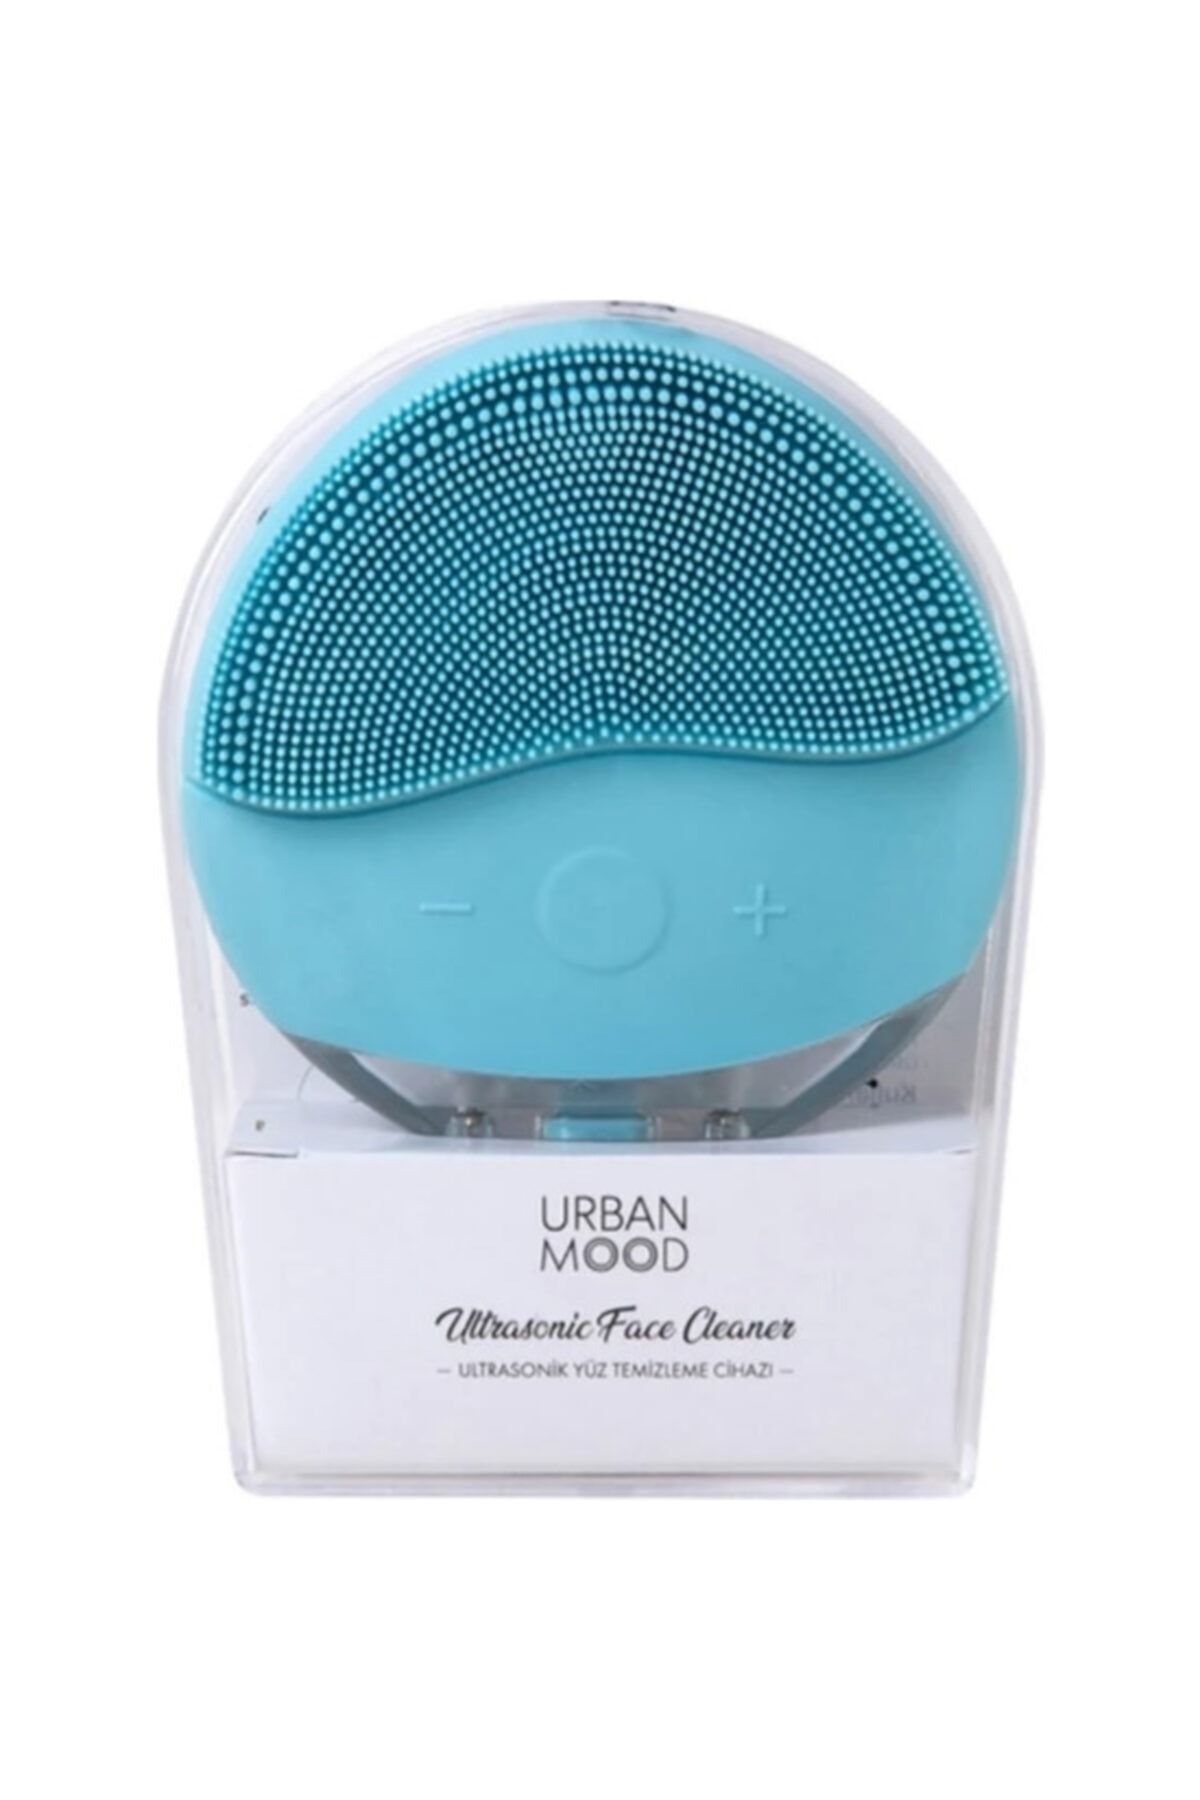 Urban Mood Ultrasonic Şarjlı Yüz Temizleme Cihazı